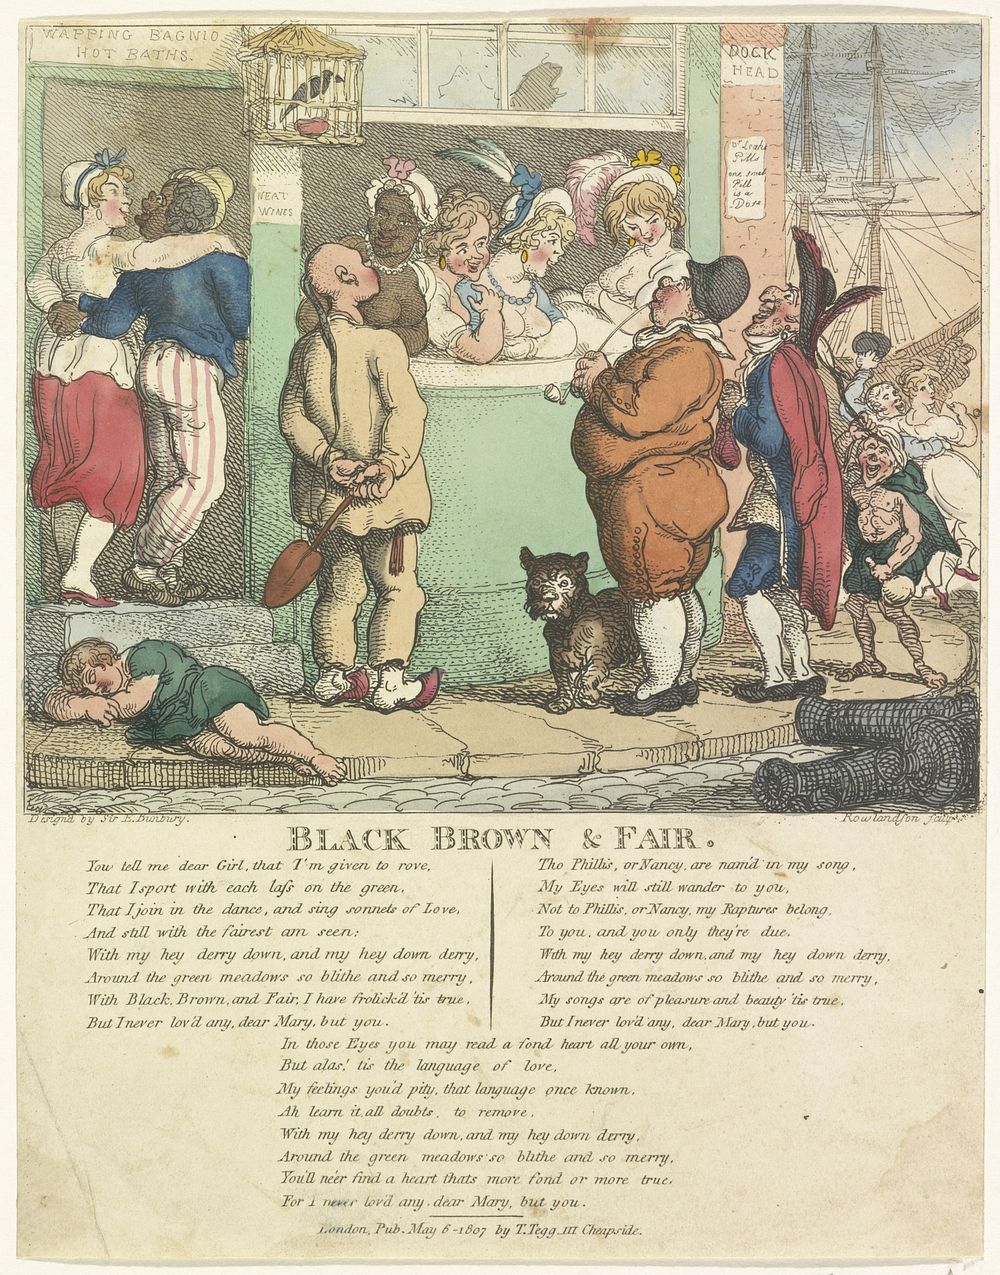 Bordeelscène, 1807 (1807) by Thomas Rowlandson, Henry William Bunbury and Thomas Tegg